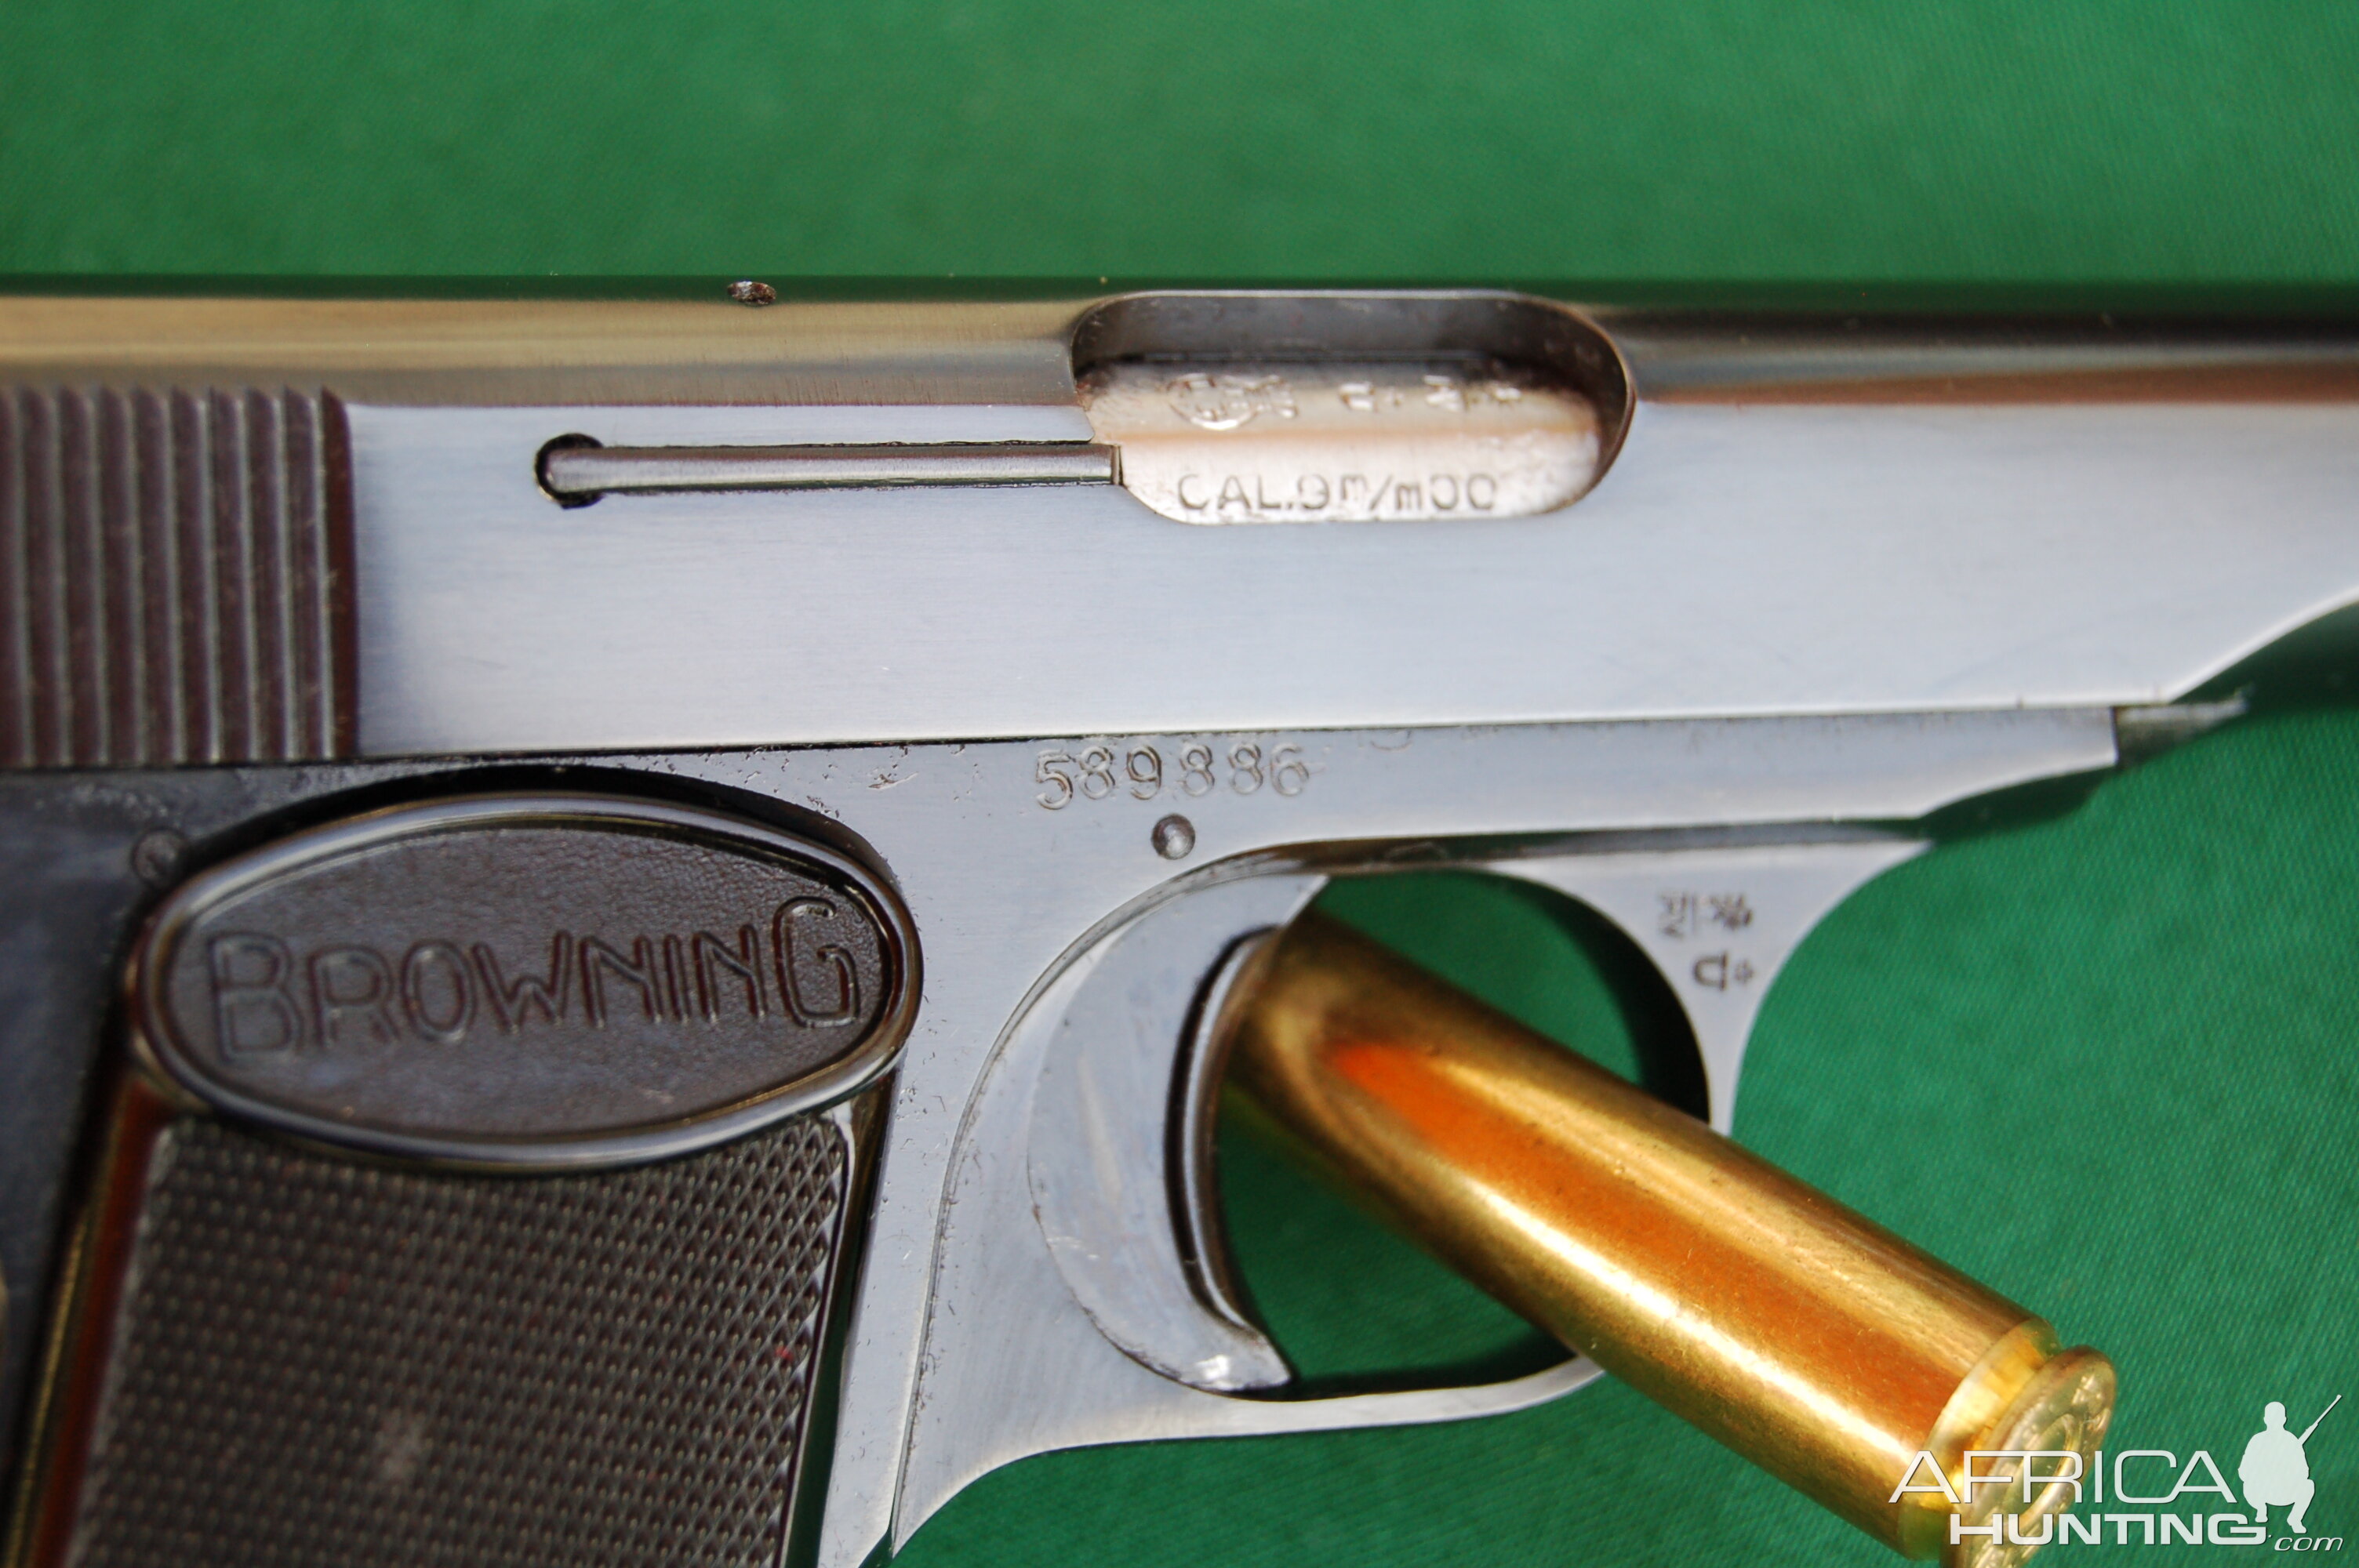 Browning 1910/1955 .380 ACP Pistol